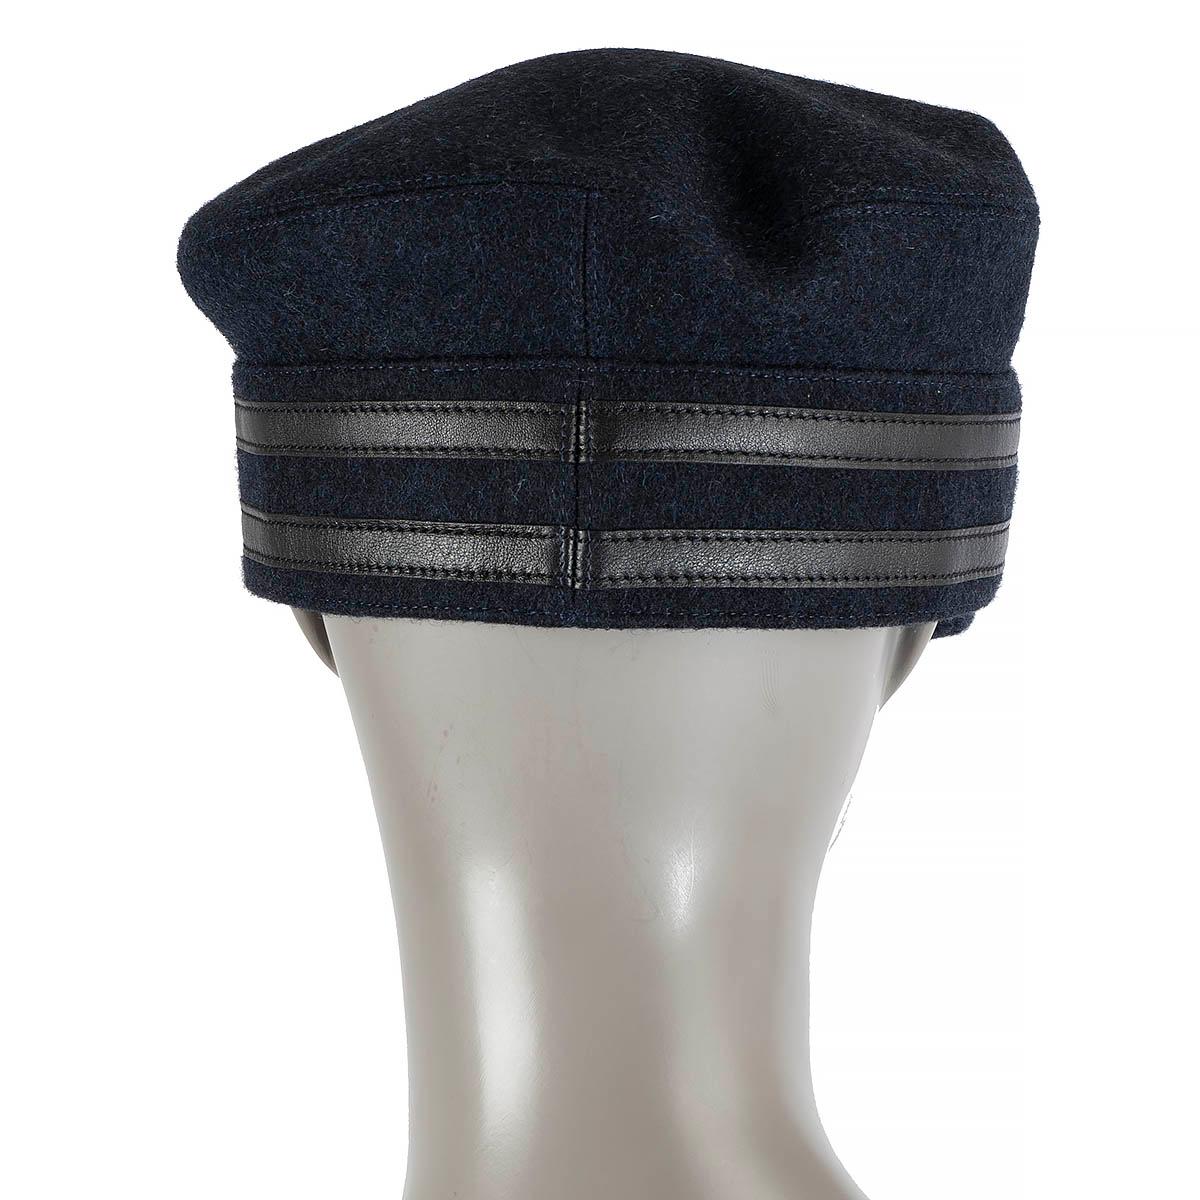 Women's HERMES blue wool FELT & LEATHER TRIMMED Cap Hat 59